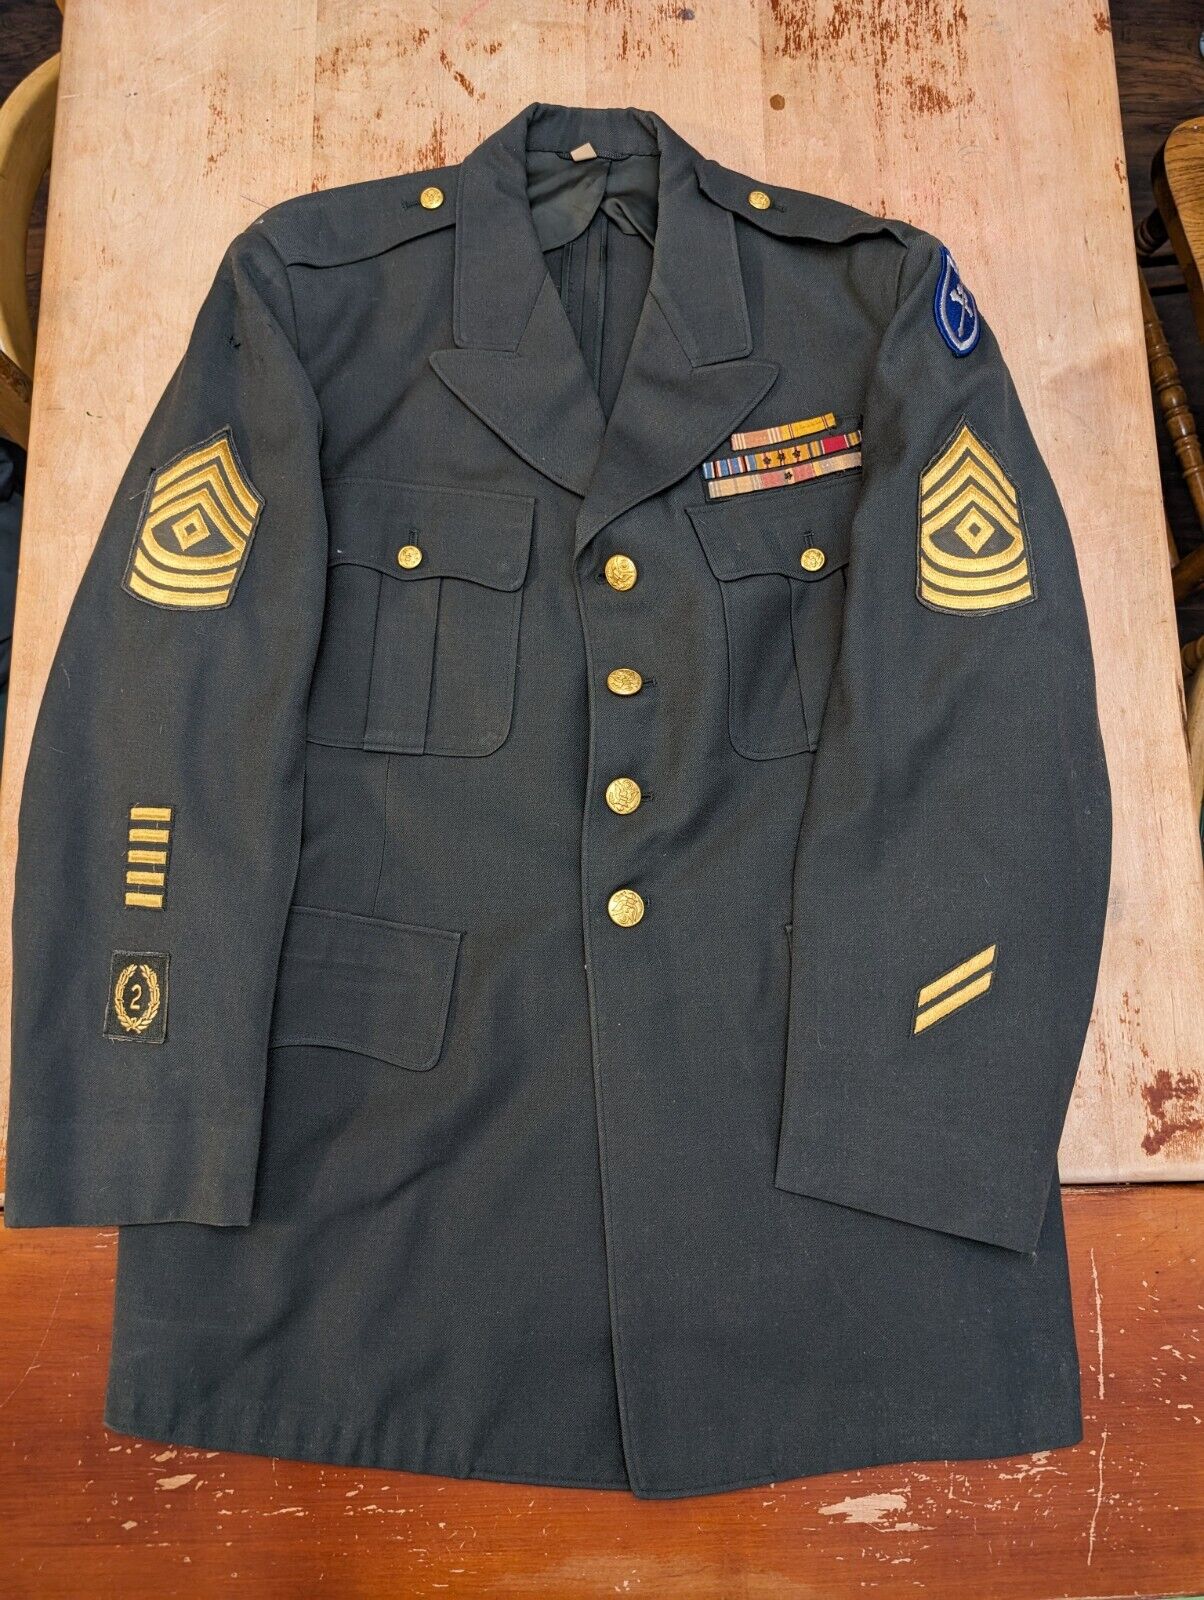 VTG US Army Wool Dress Jacket Men\'s Green 44R Rank Patches Bars Lebanon Crisis